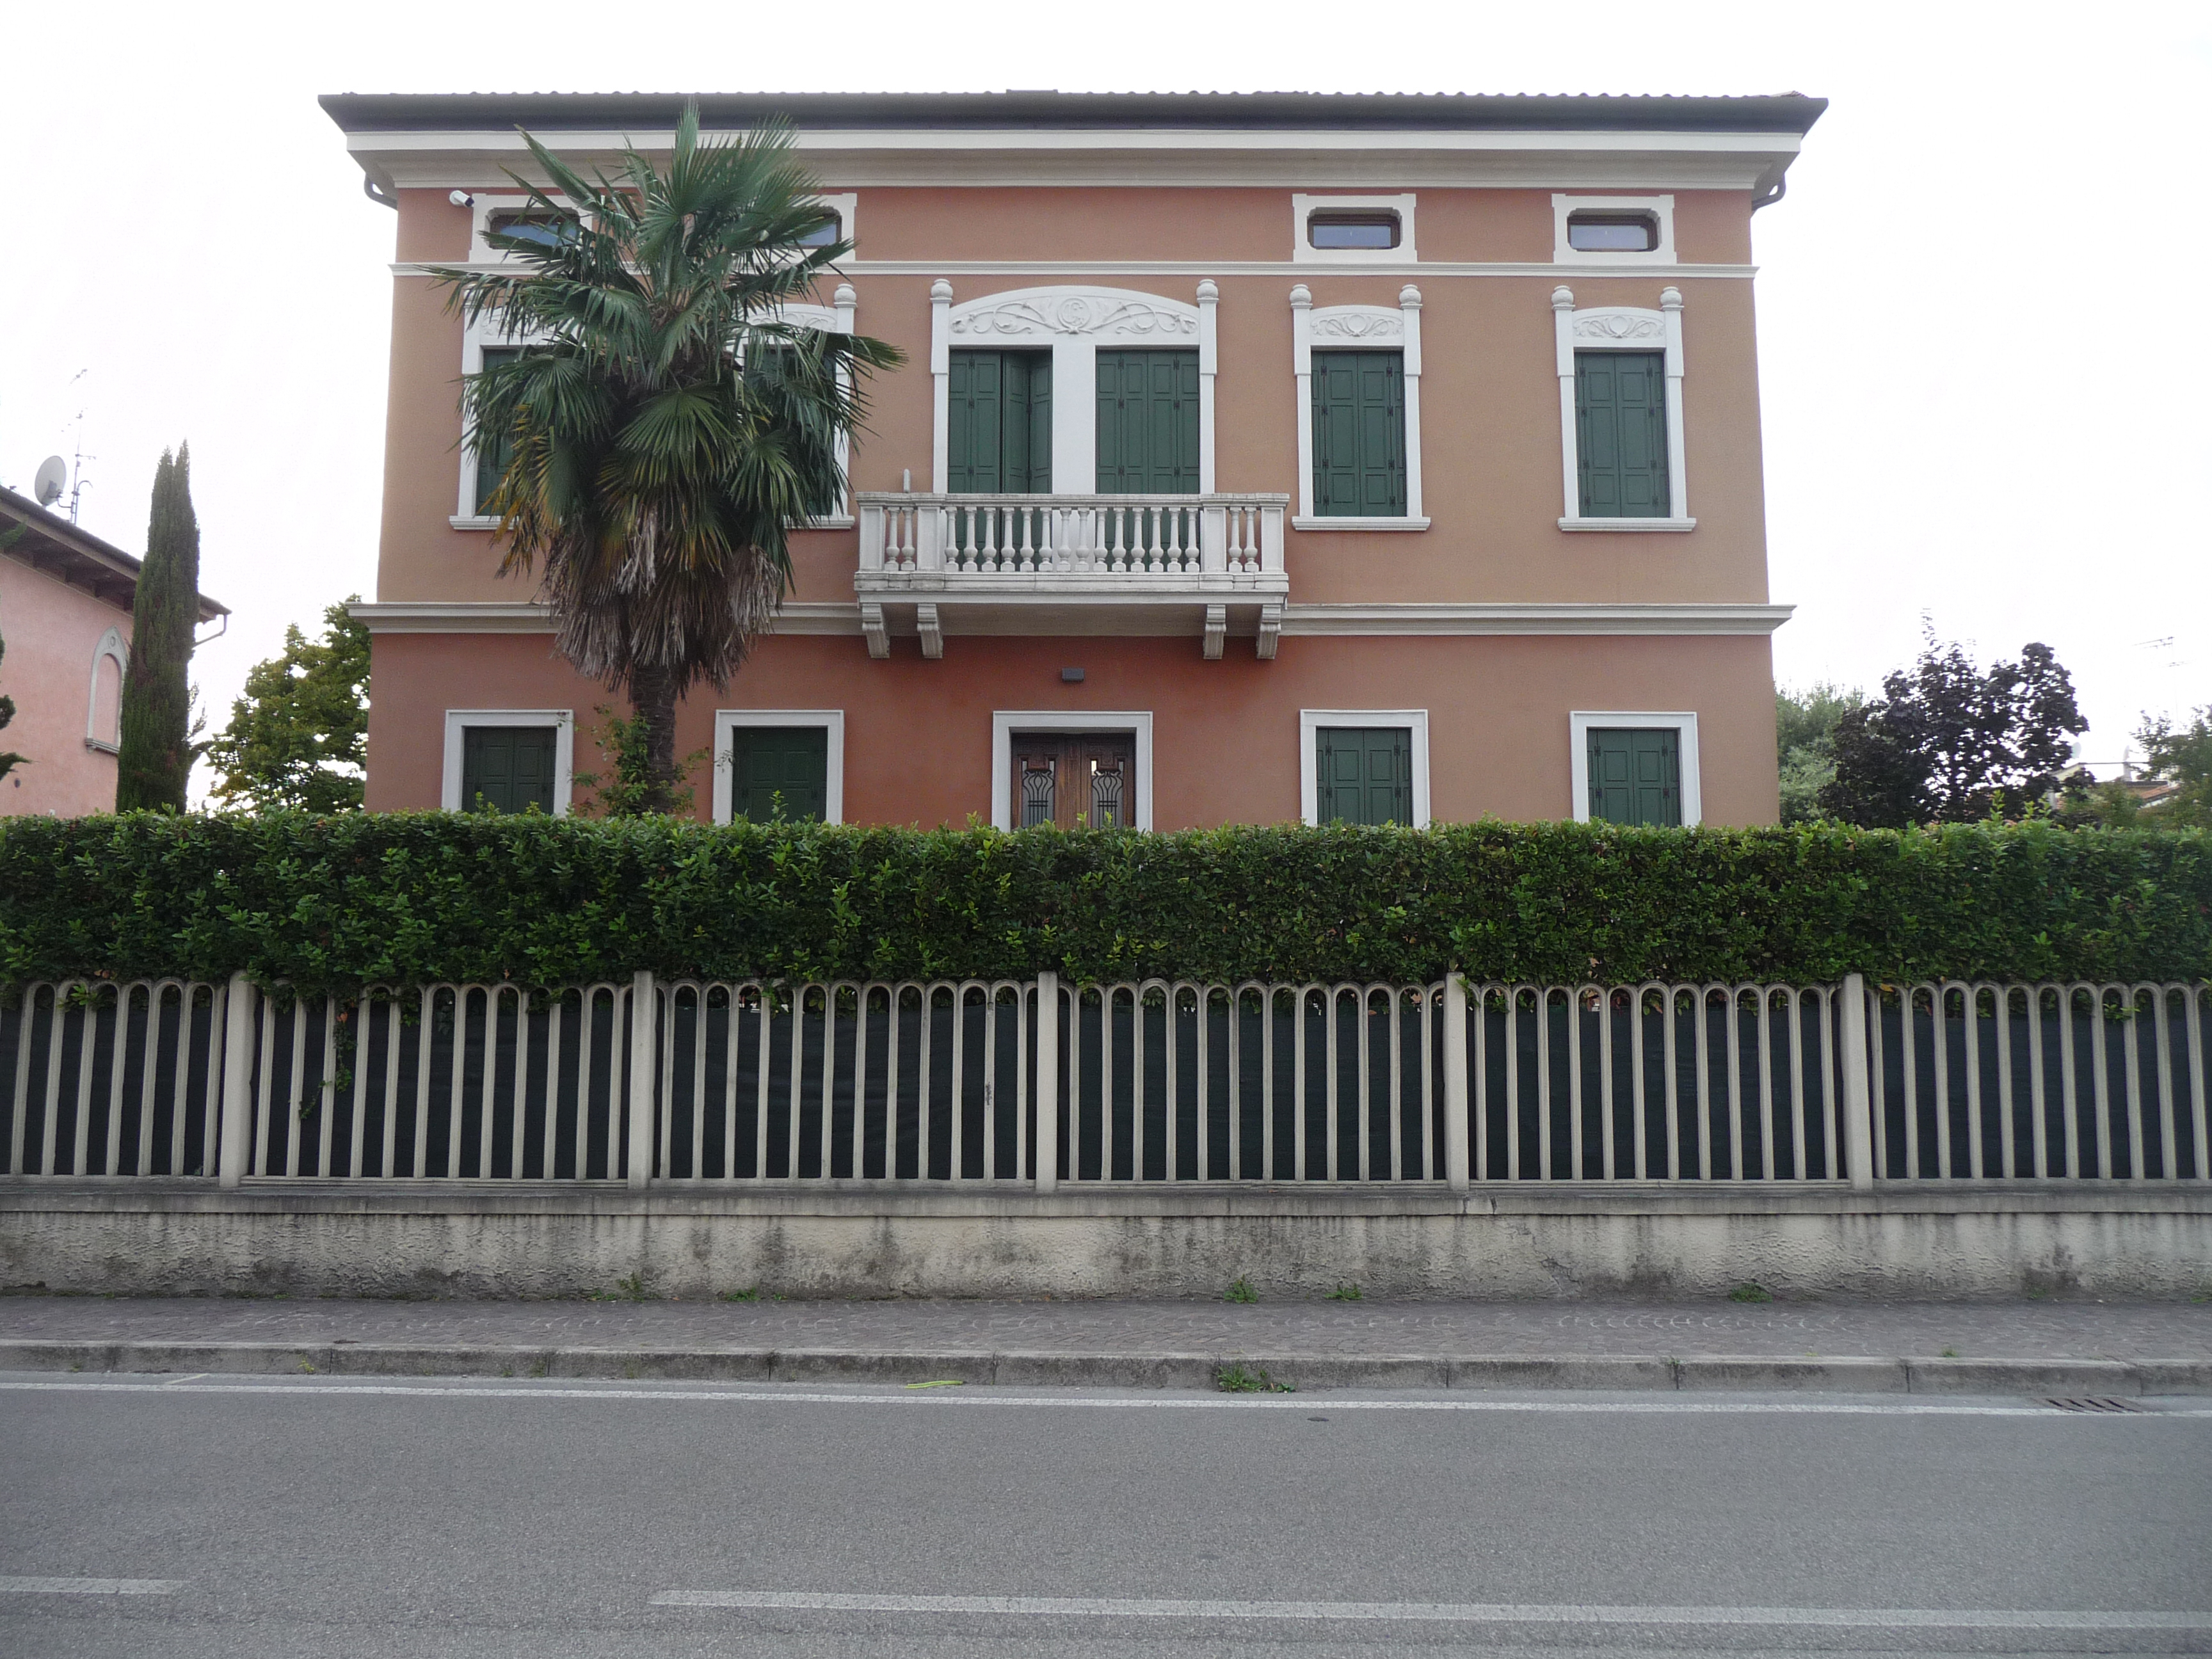 Immobile sito in Via Zermanese (villa) - Treviso (TV) 